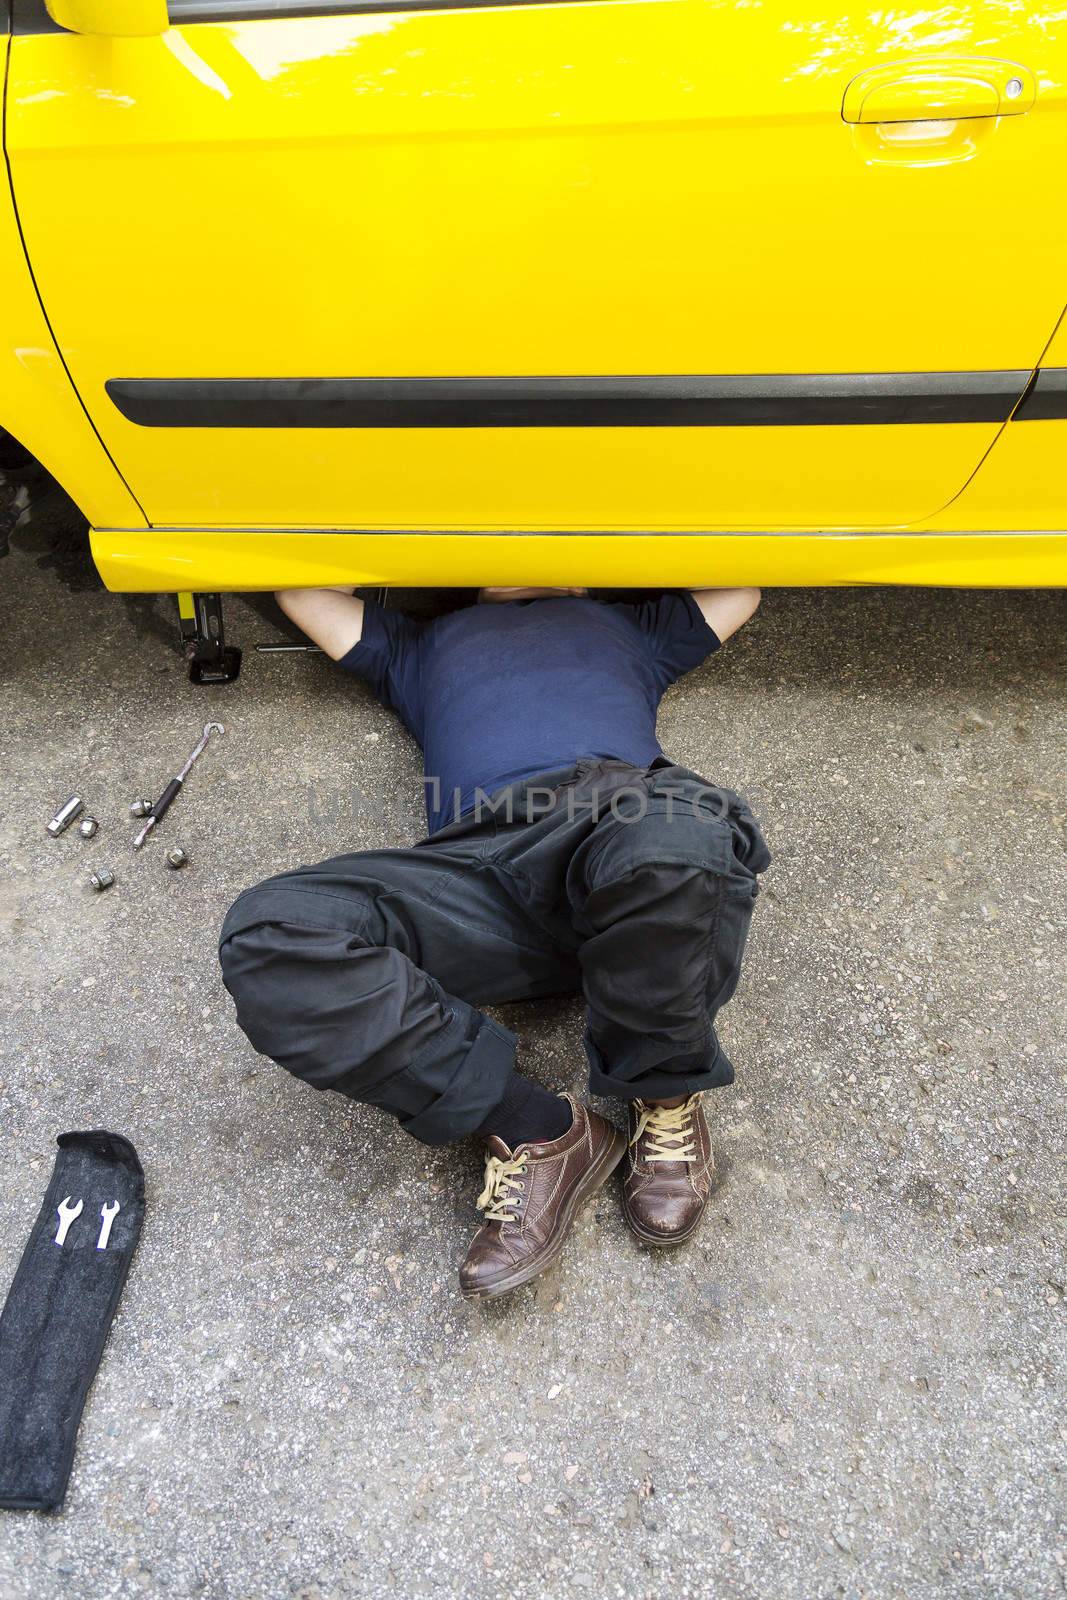 Repairing Car by andrew_blue